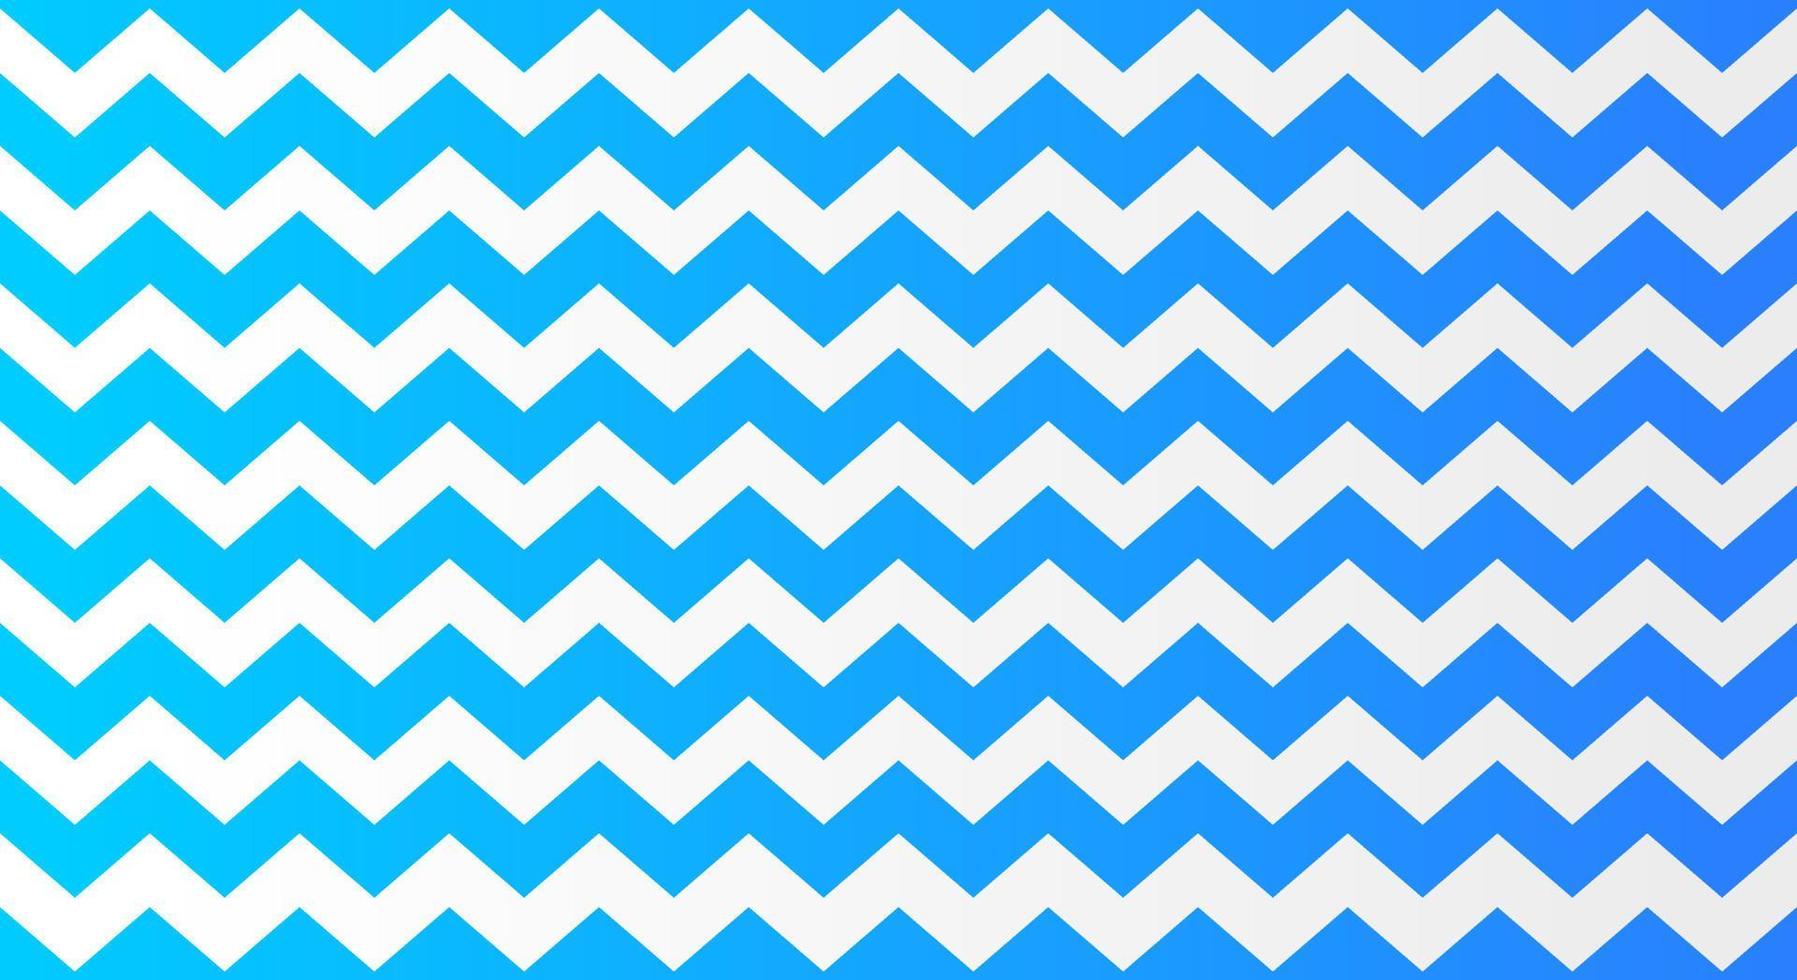 ziguezague gradiente de fundo azul e branco vetor